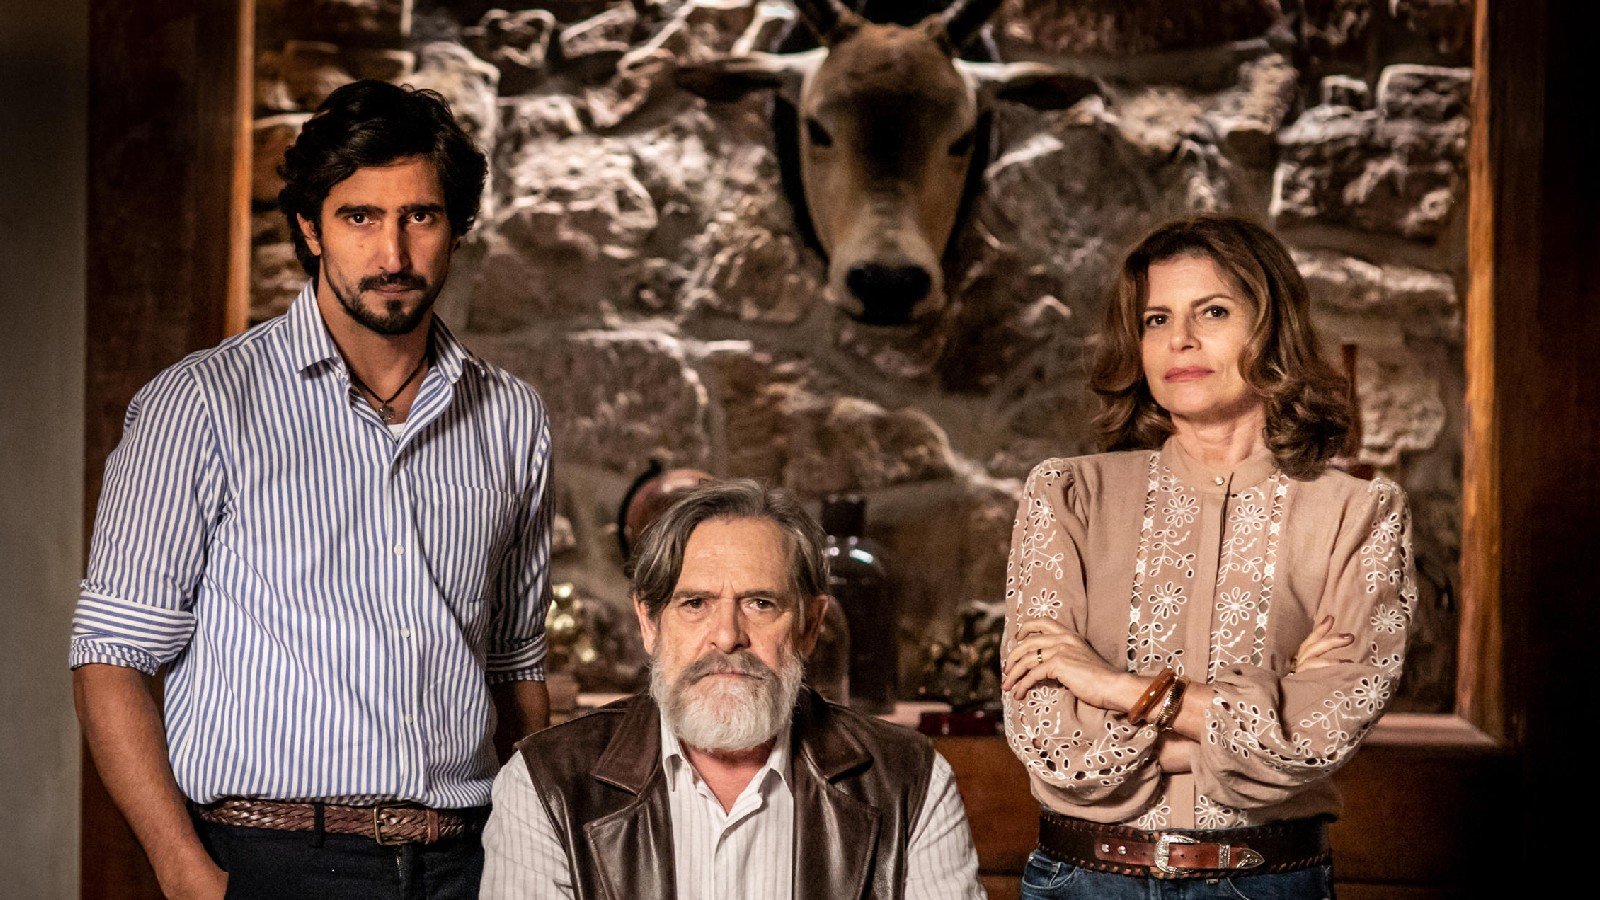 Família de Tertulinho (Renato Góes), composta por Tertúlio (José de Abreu) e Deodora (Débora Bloch).